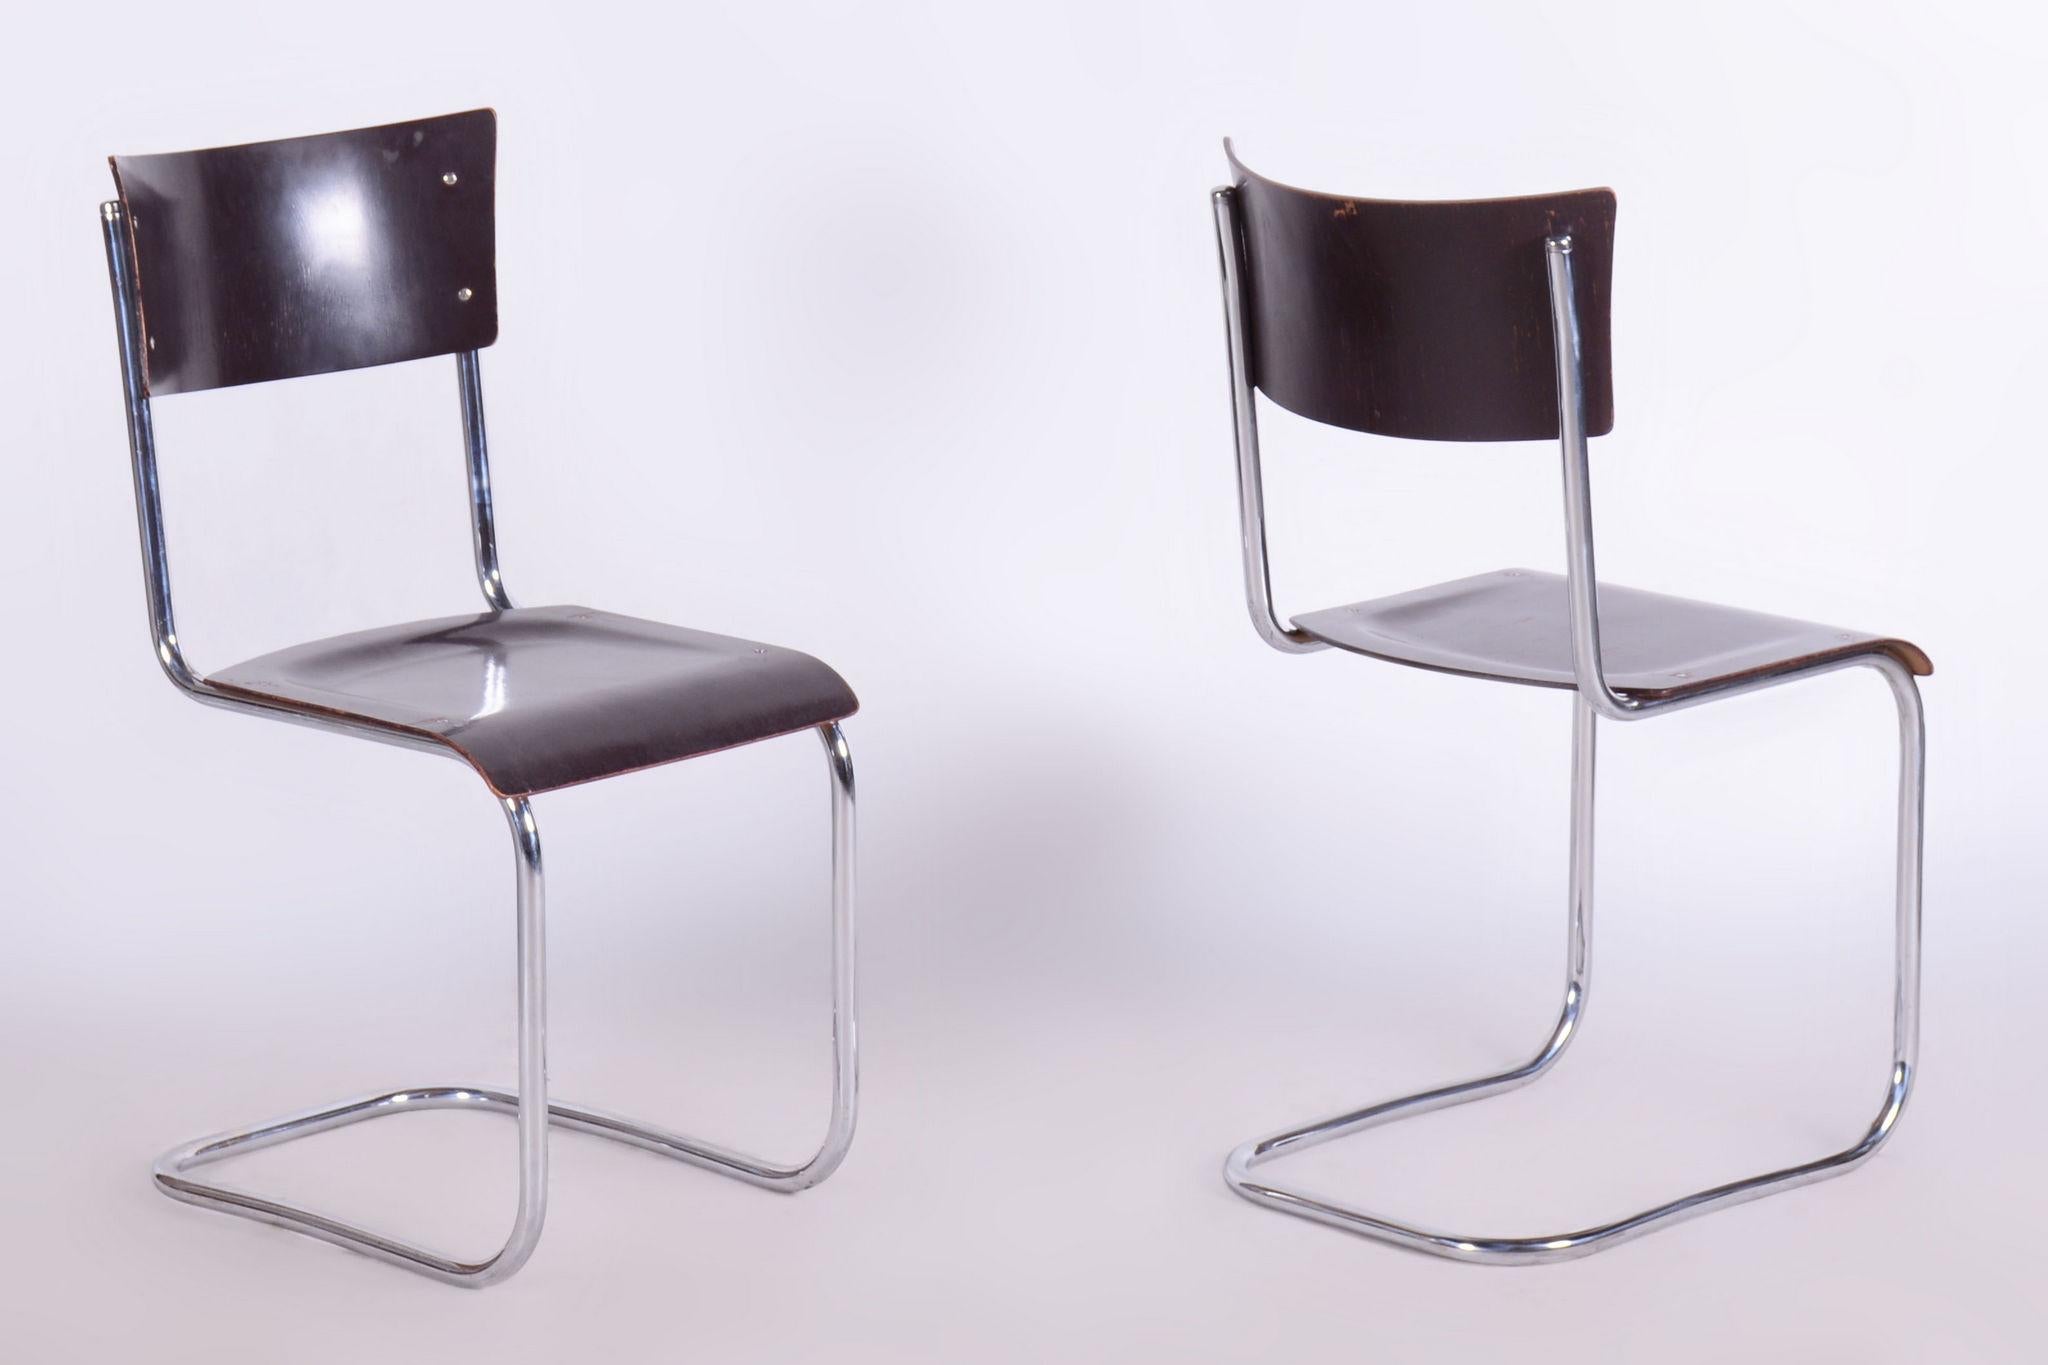 Steel Set of 4 Restored Bauhaus Chairs, Mart Stam, Robert Slezak, Czechia, 1930s For Sale